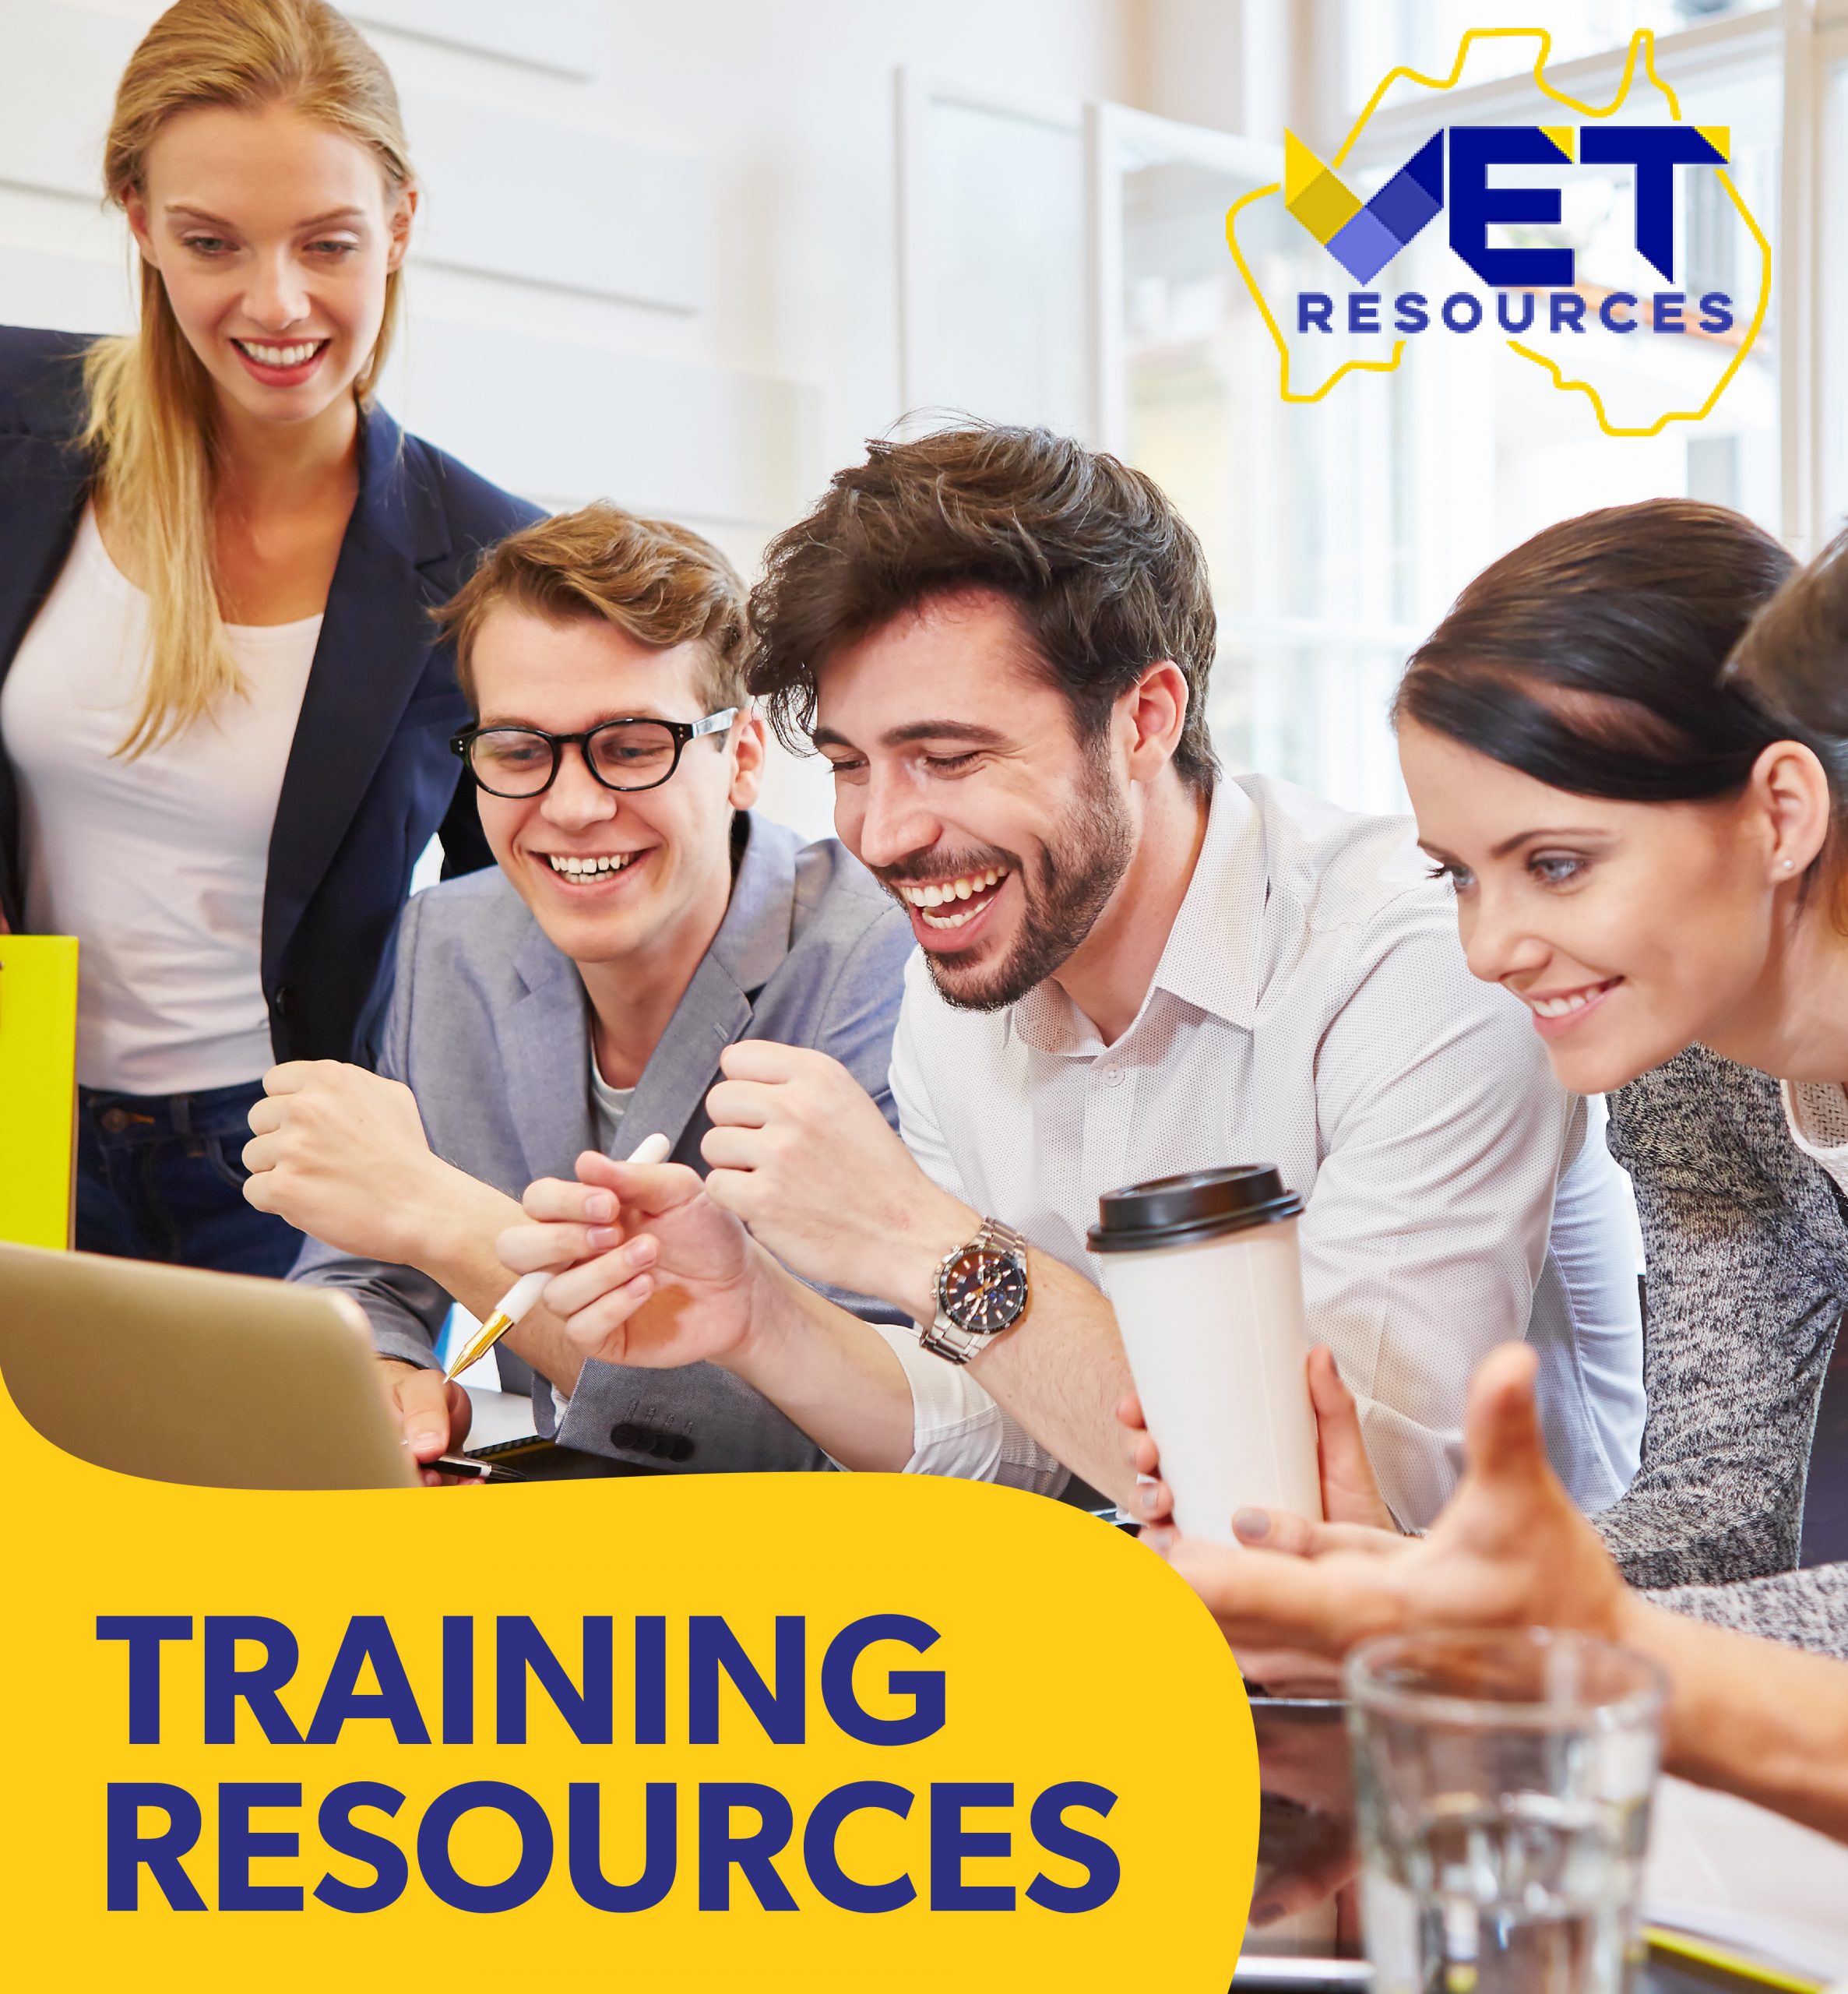 VET Resources Training Resources